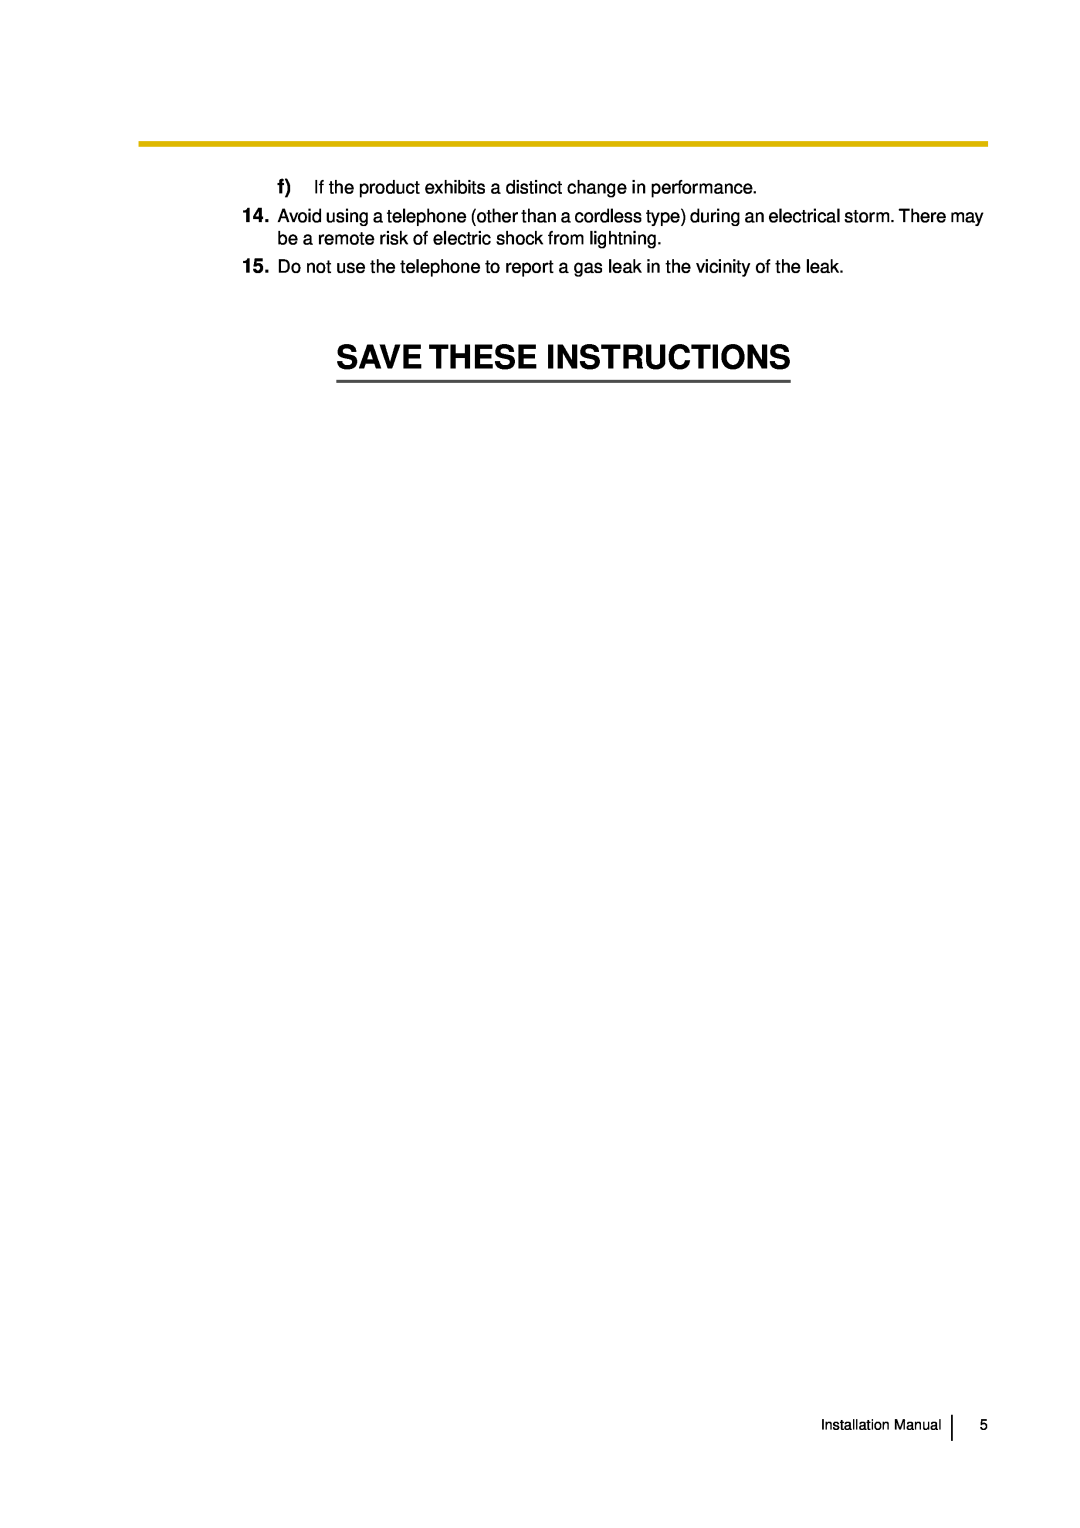 Panasonic KX-TDA30 installation manual Save These Instructions, Installation Manual 